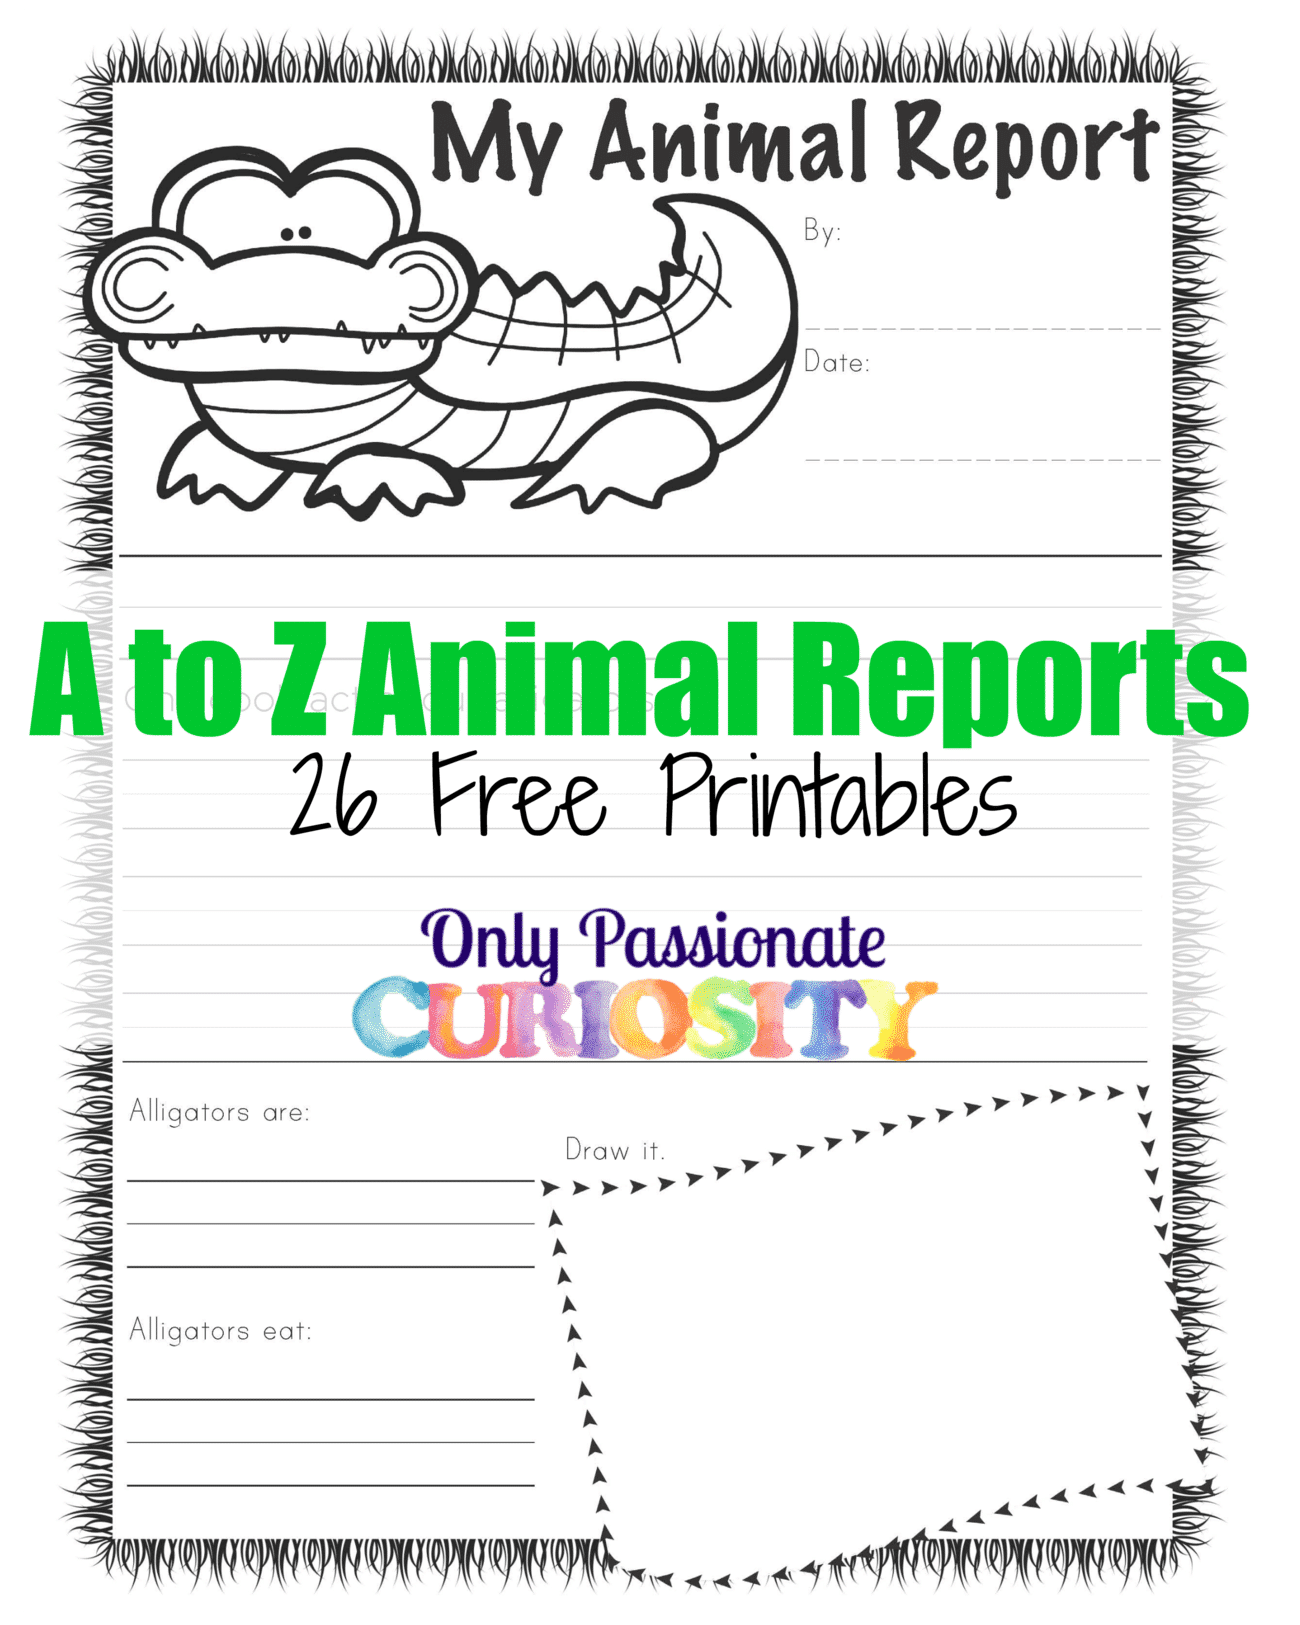 ABC Animal Reports